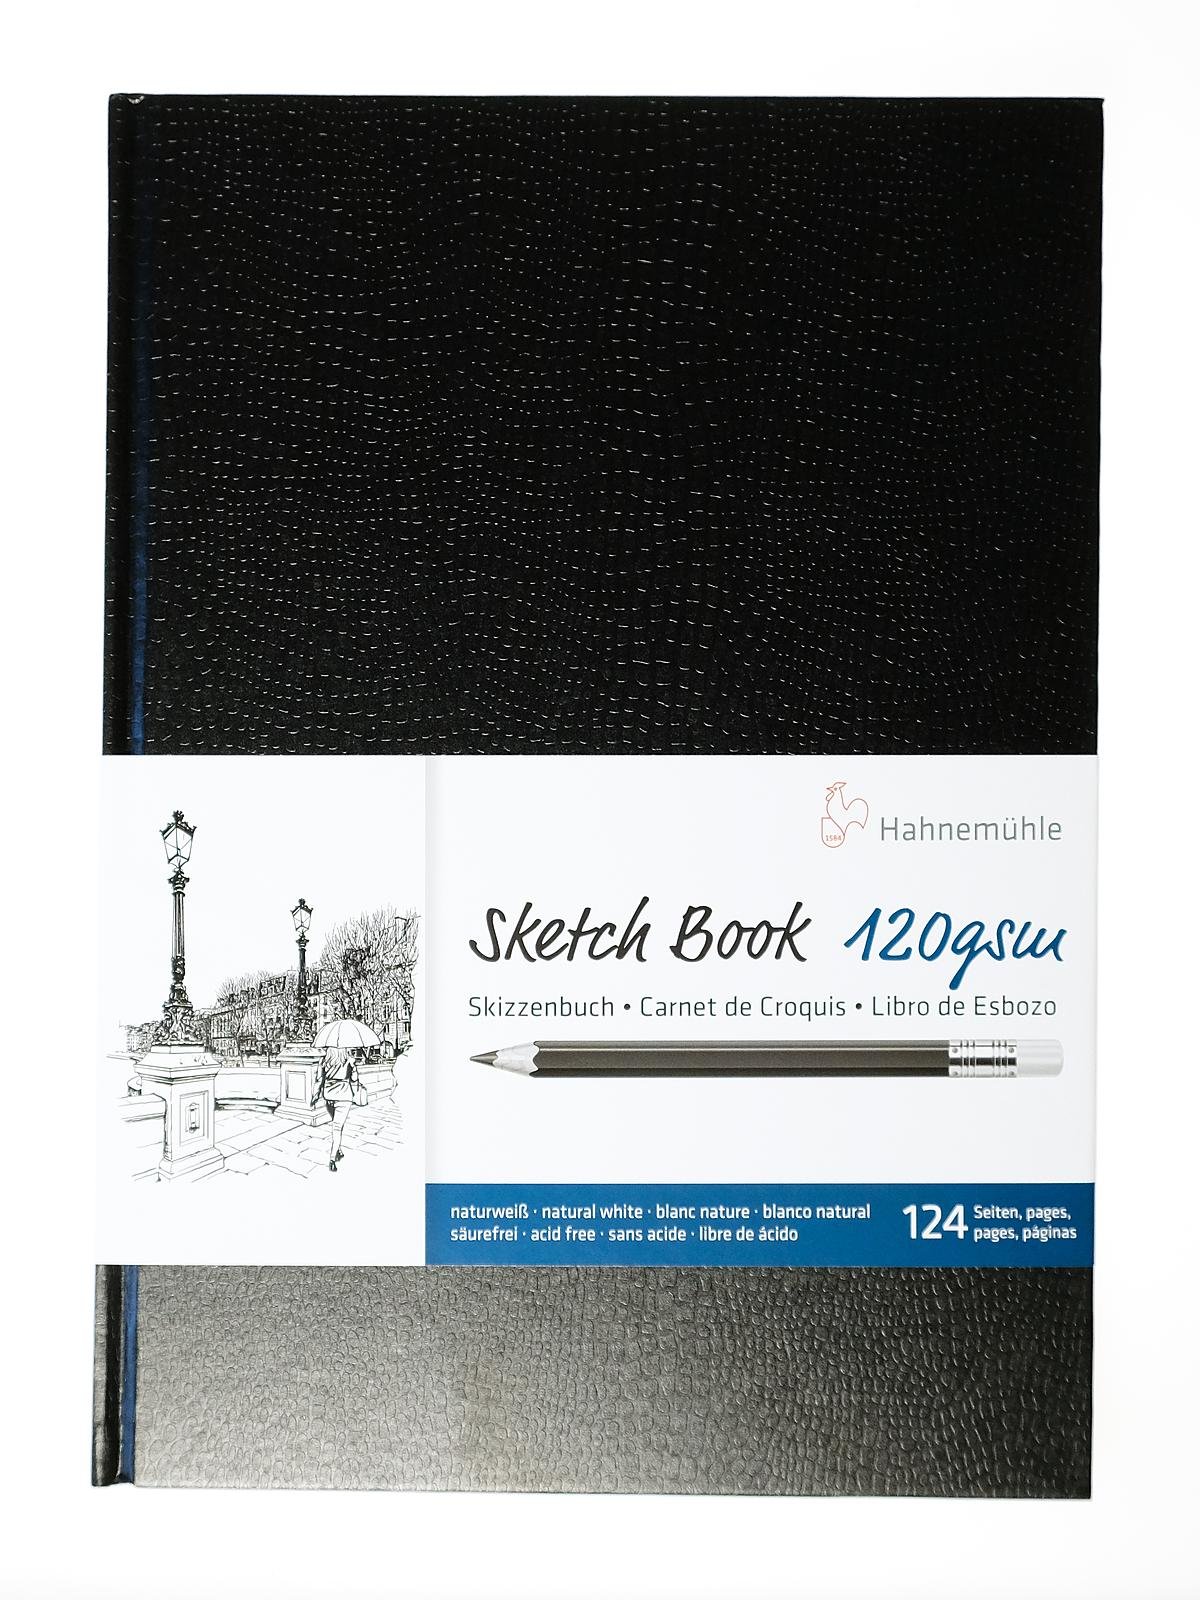 Moleskine Art Collection Sketchbook 5 x 8.25